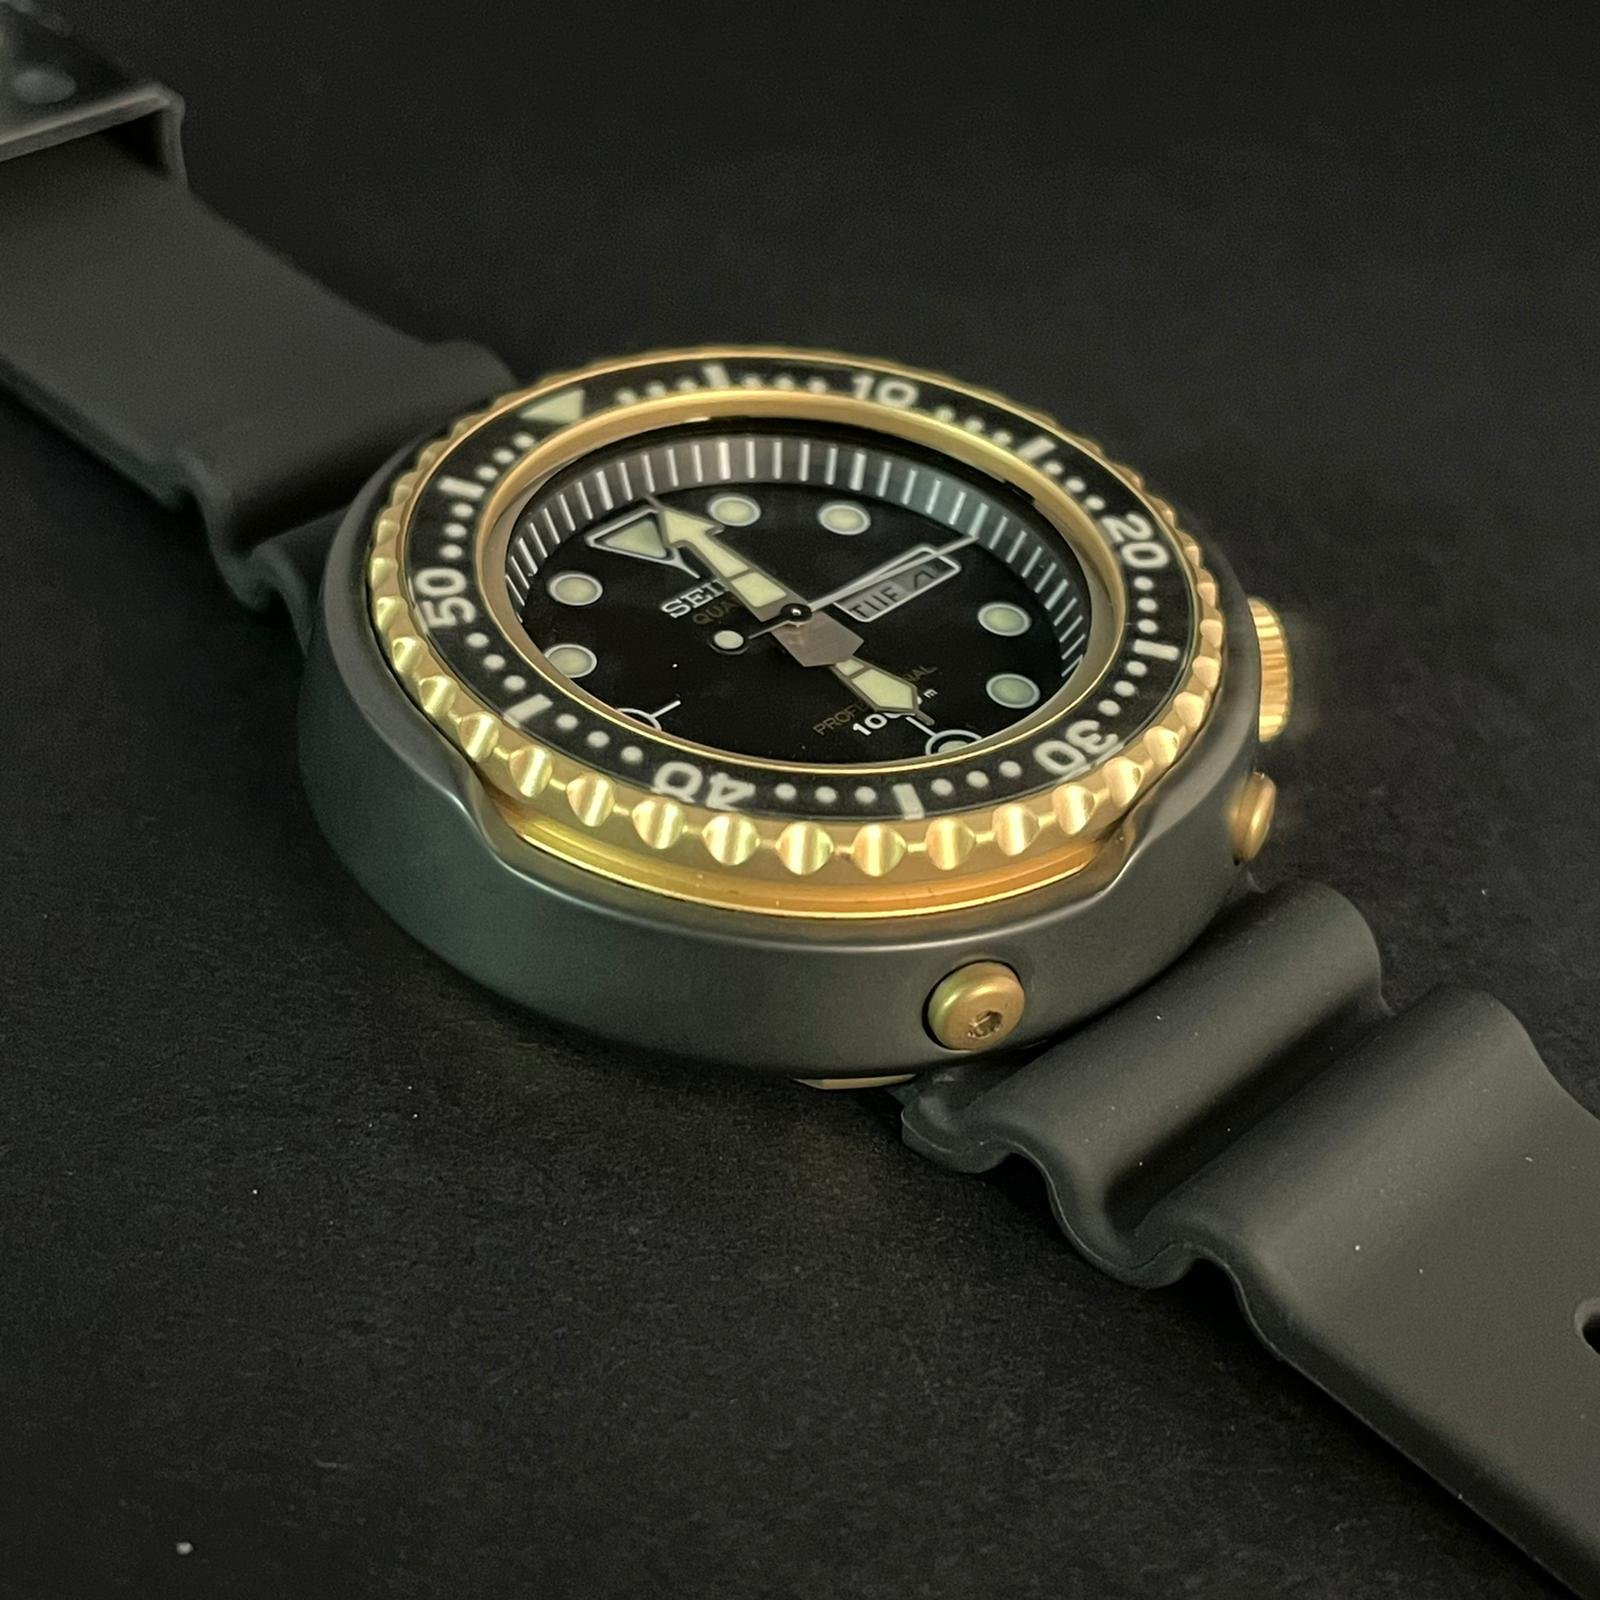 Seiko Marine Master Prospex Quartz Diver's Limited 1978 Pcs. - SBBN040 |  Luxury brand watches for sale, Monaco, Zurich, Dubai, Hong Kong